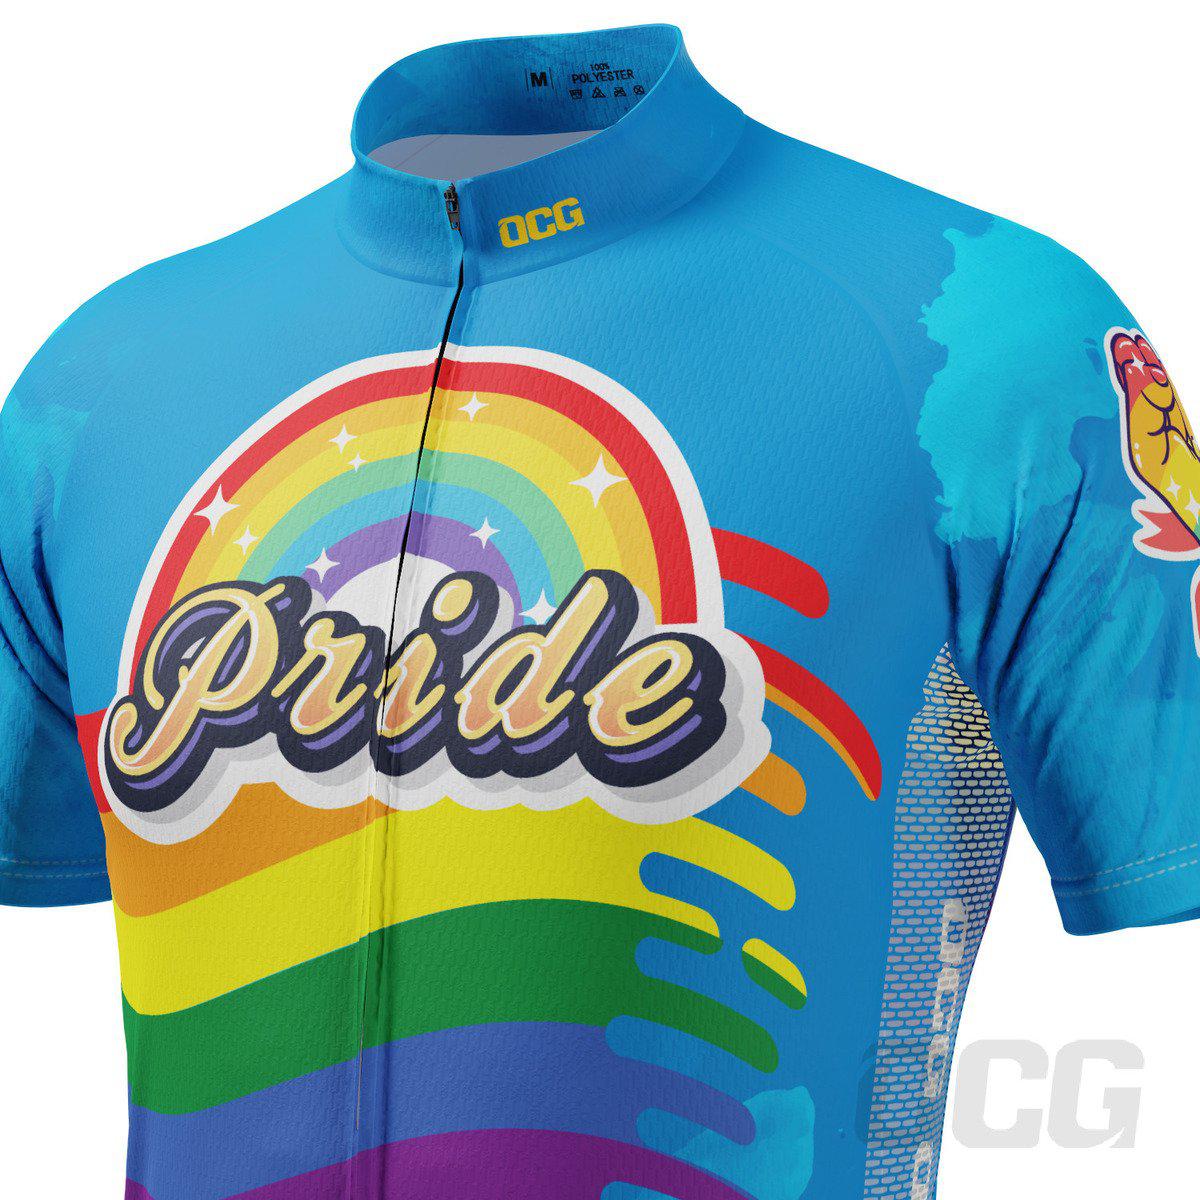 AIO Pride Tropical Bike Polo Shirt, Tropical Cycling Themed Shirt